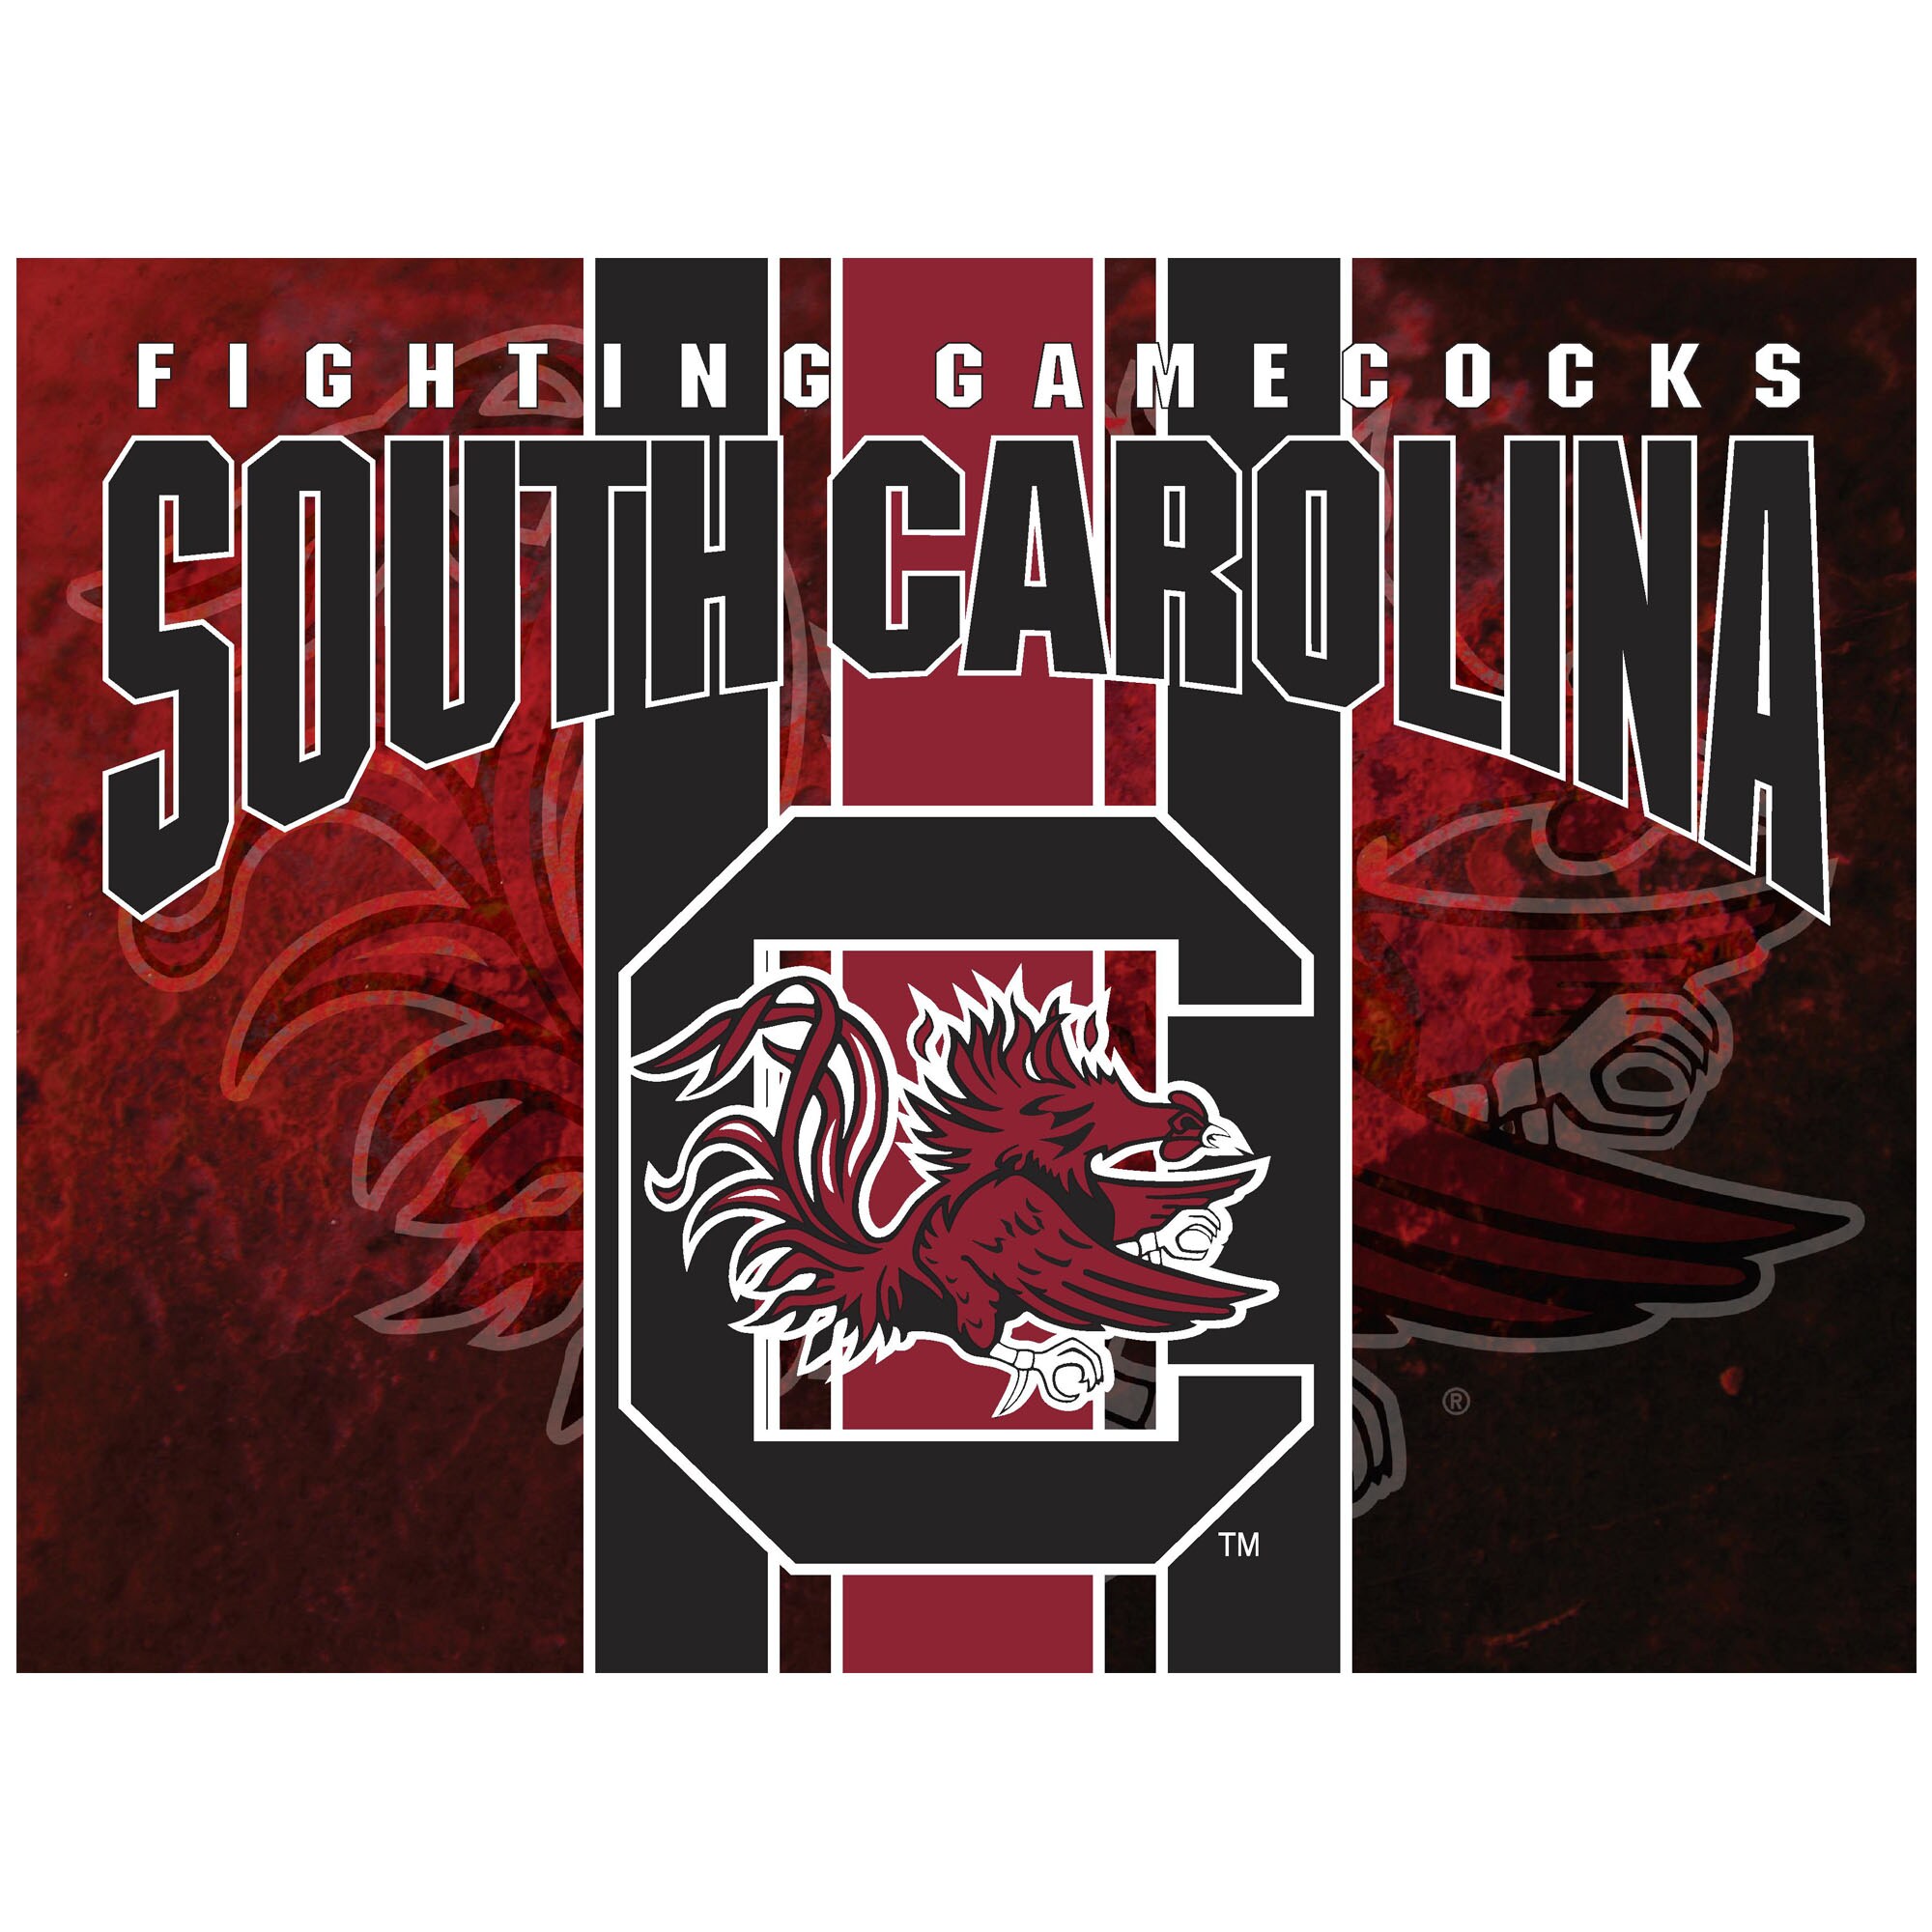 South Carolina Gamecocks Classic Football Poster